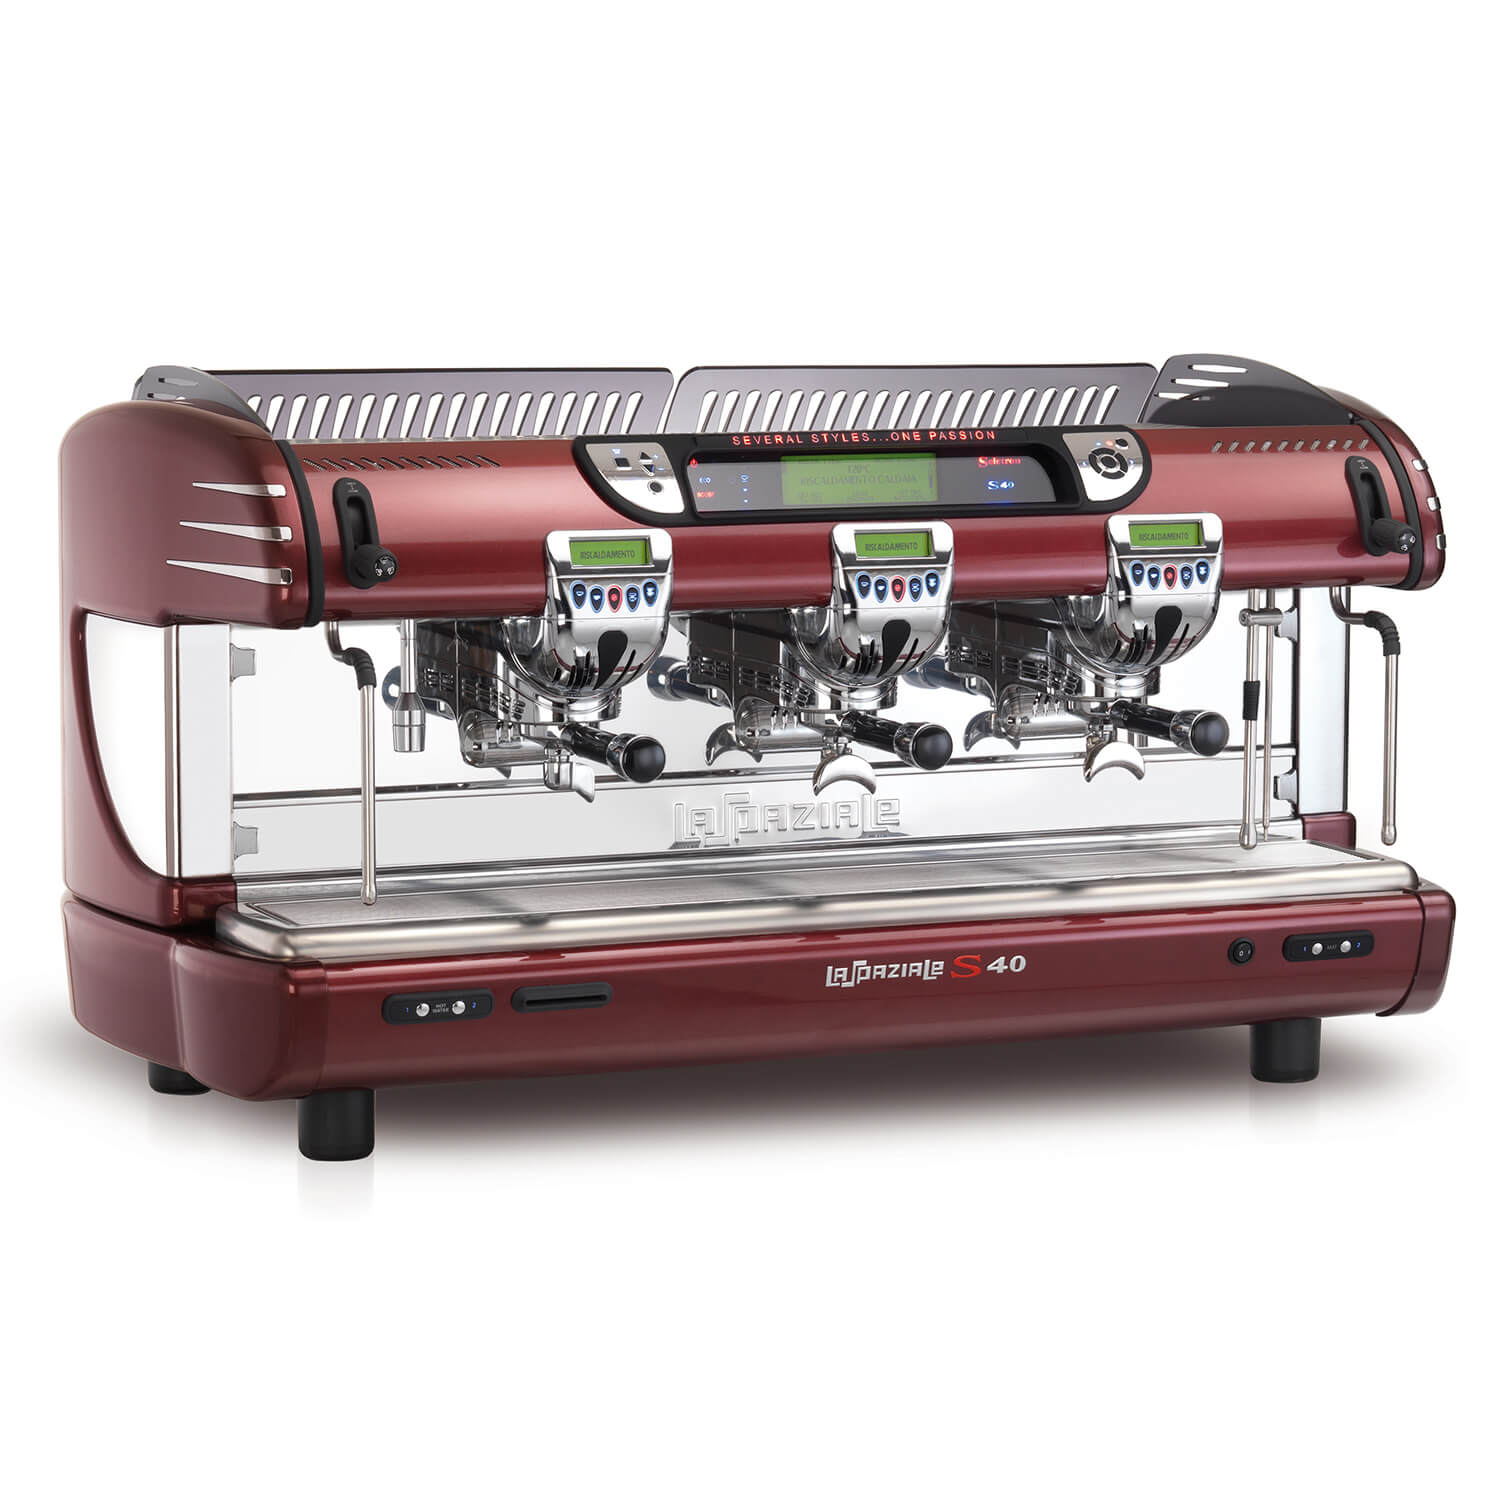 La Spaziale S2 2 Group Volumetric Commercial Espresso Machine